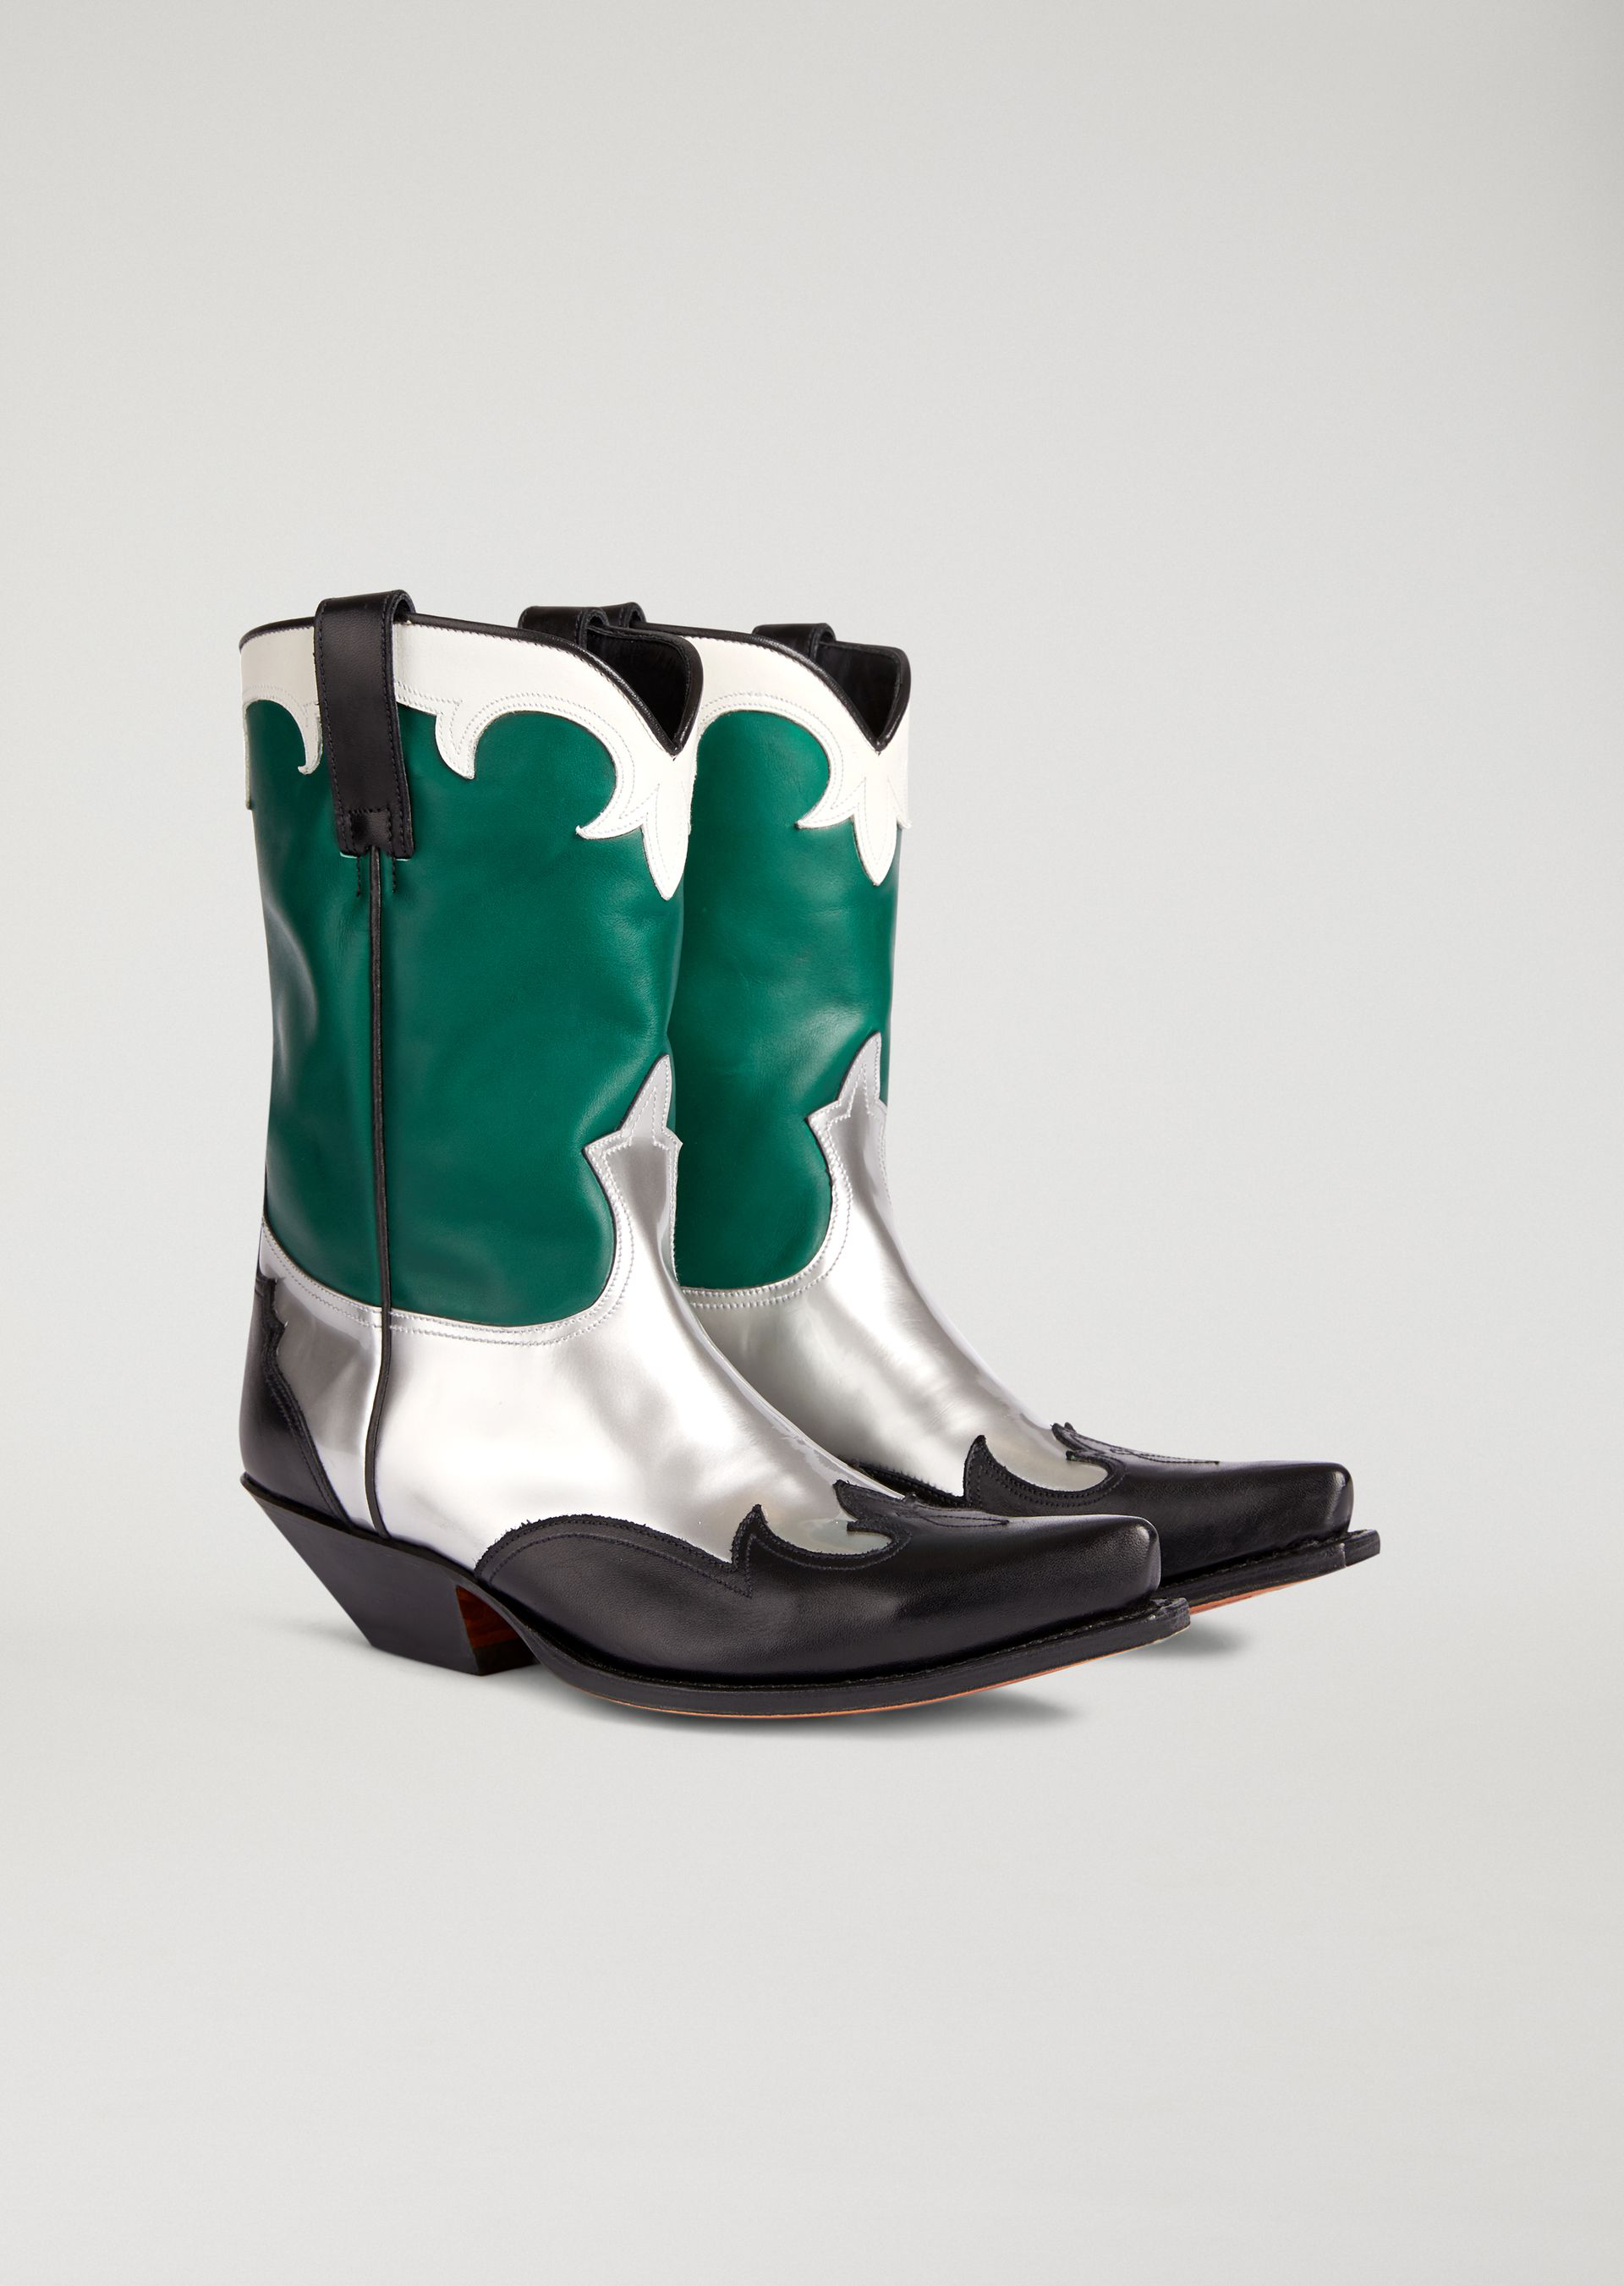 Emporio Armani Boots - Item 11577947 In 